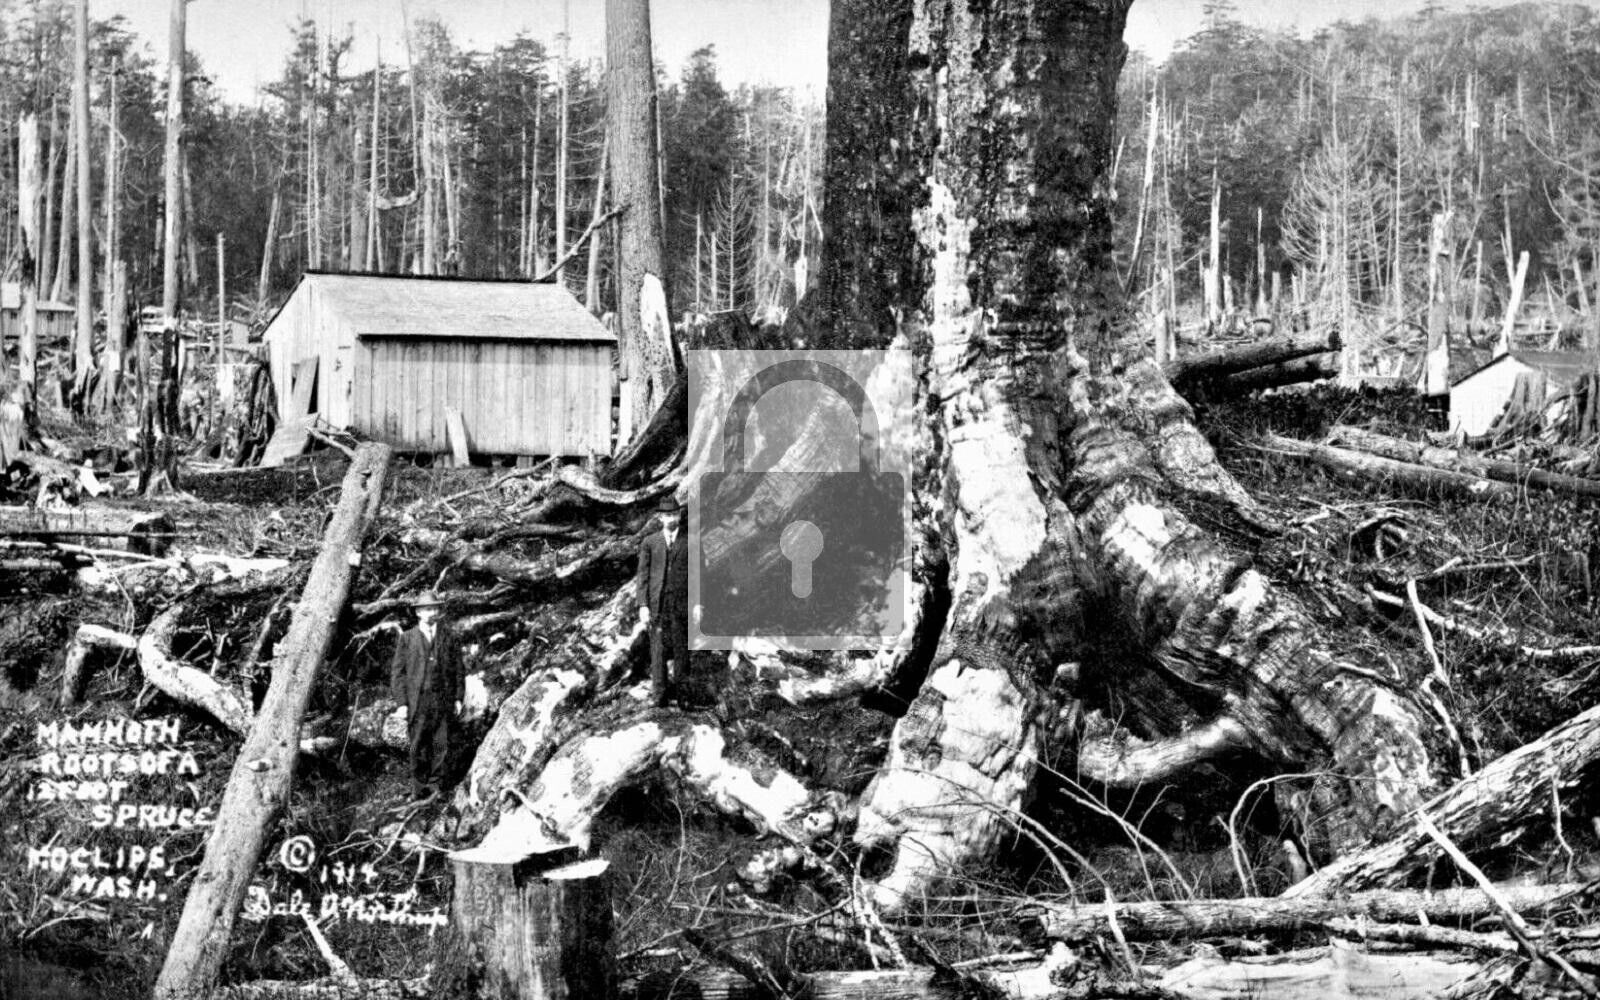 Mammoth Roots Spruce Tree Moclips Washington WA Reprint Postcard